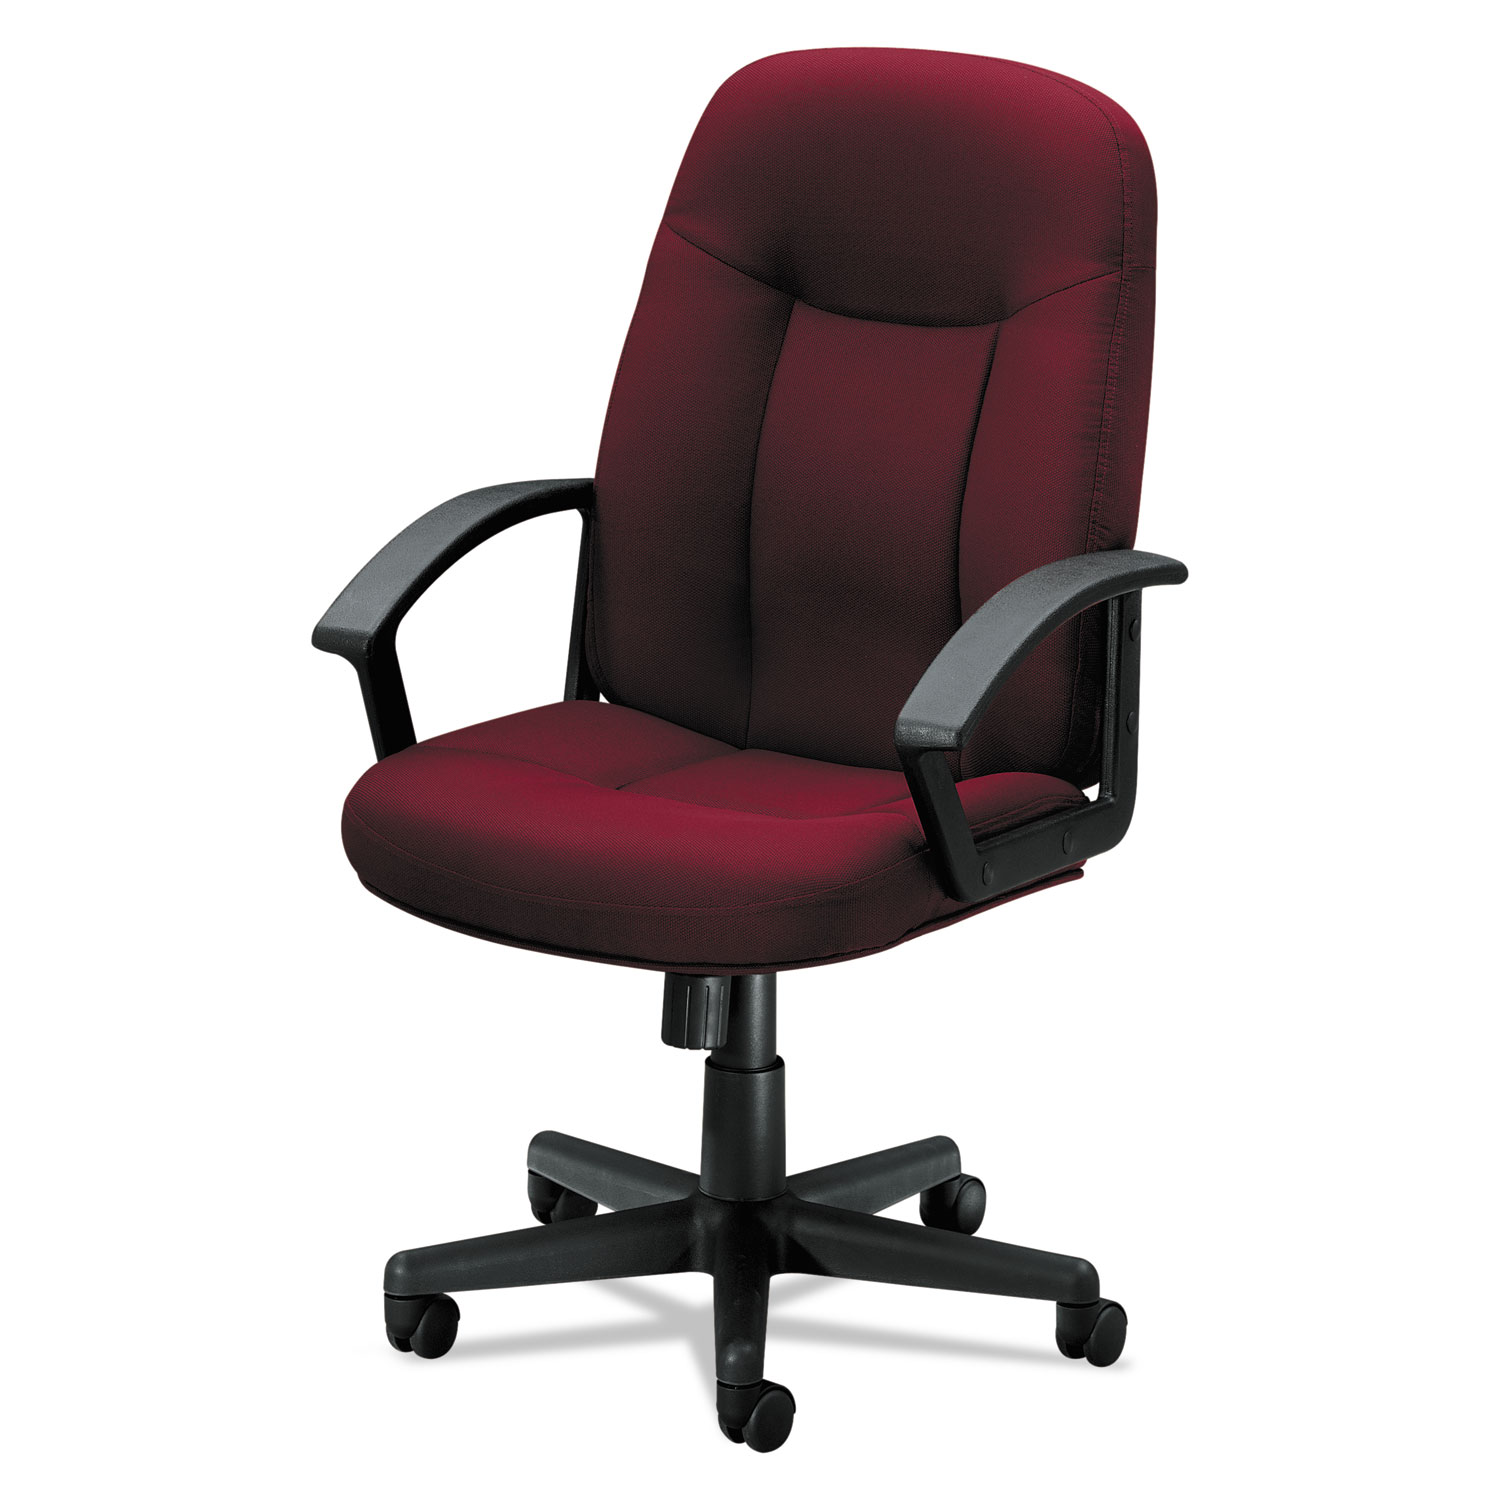 VL601 Series Executive High-Back Swivel/Tilt Chair, Burgundy Fabric/Black Frame